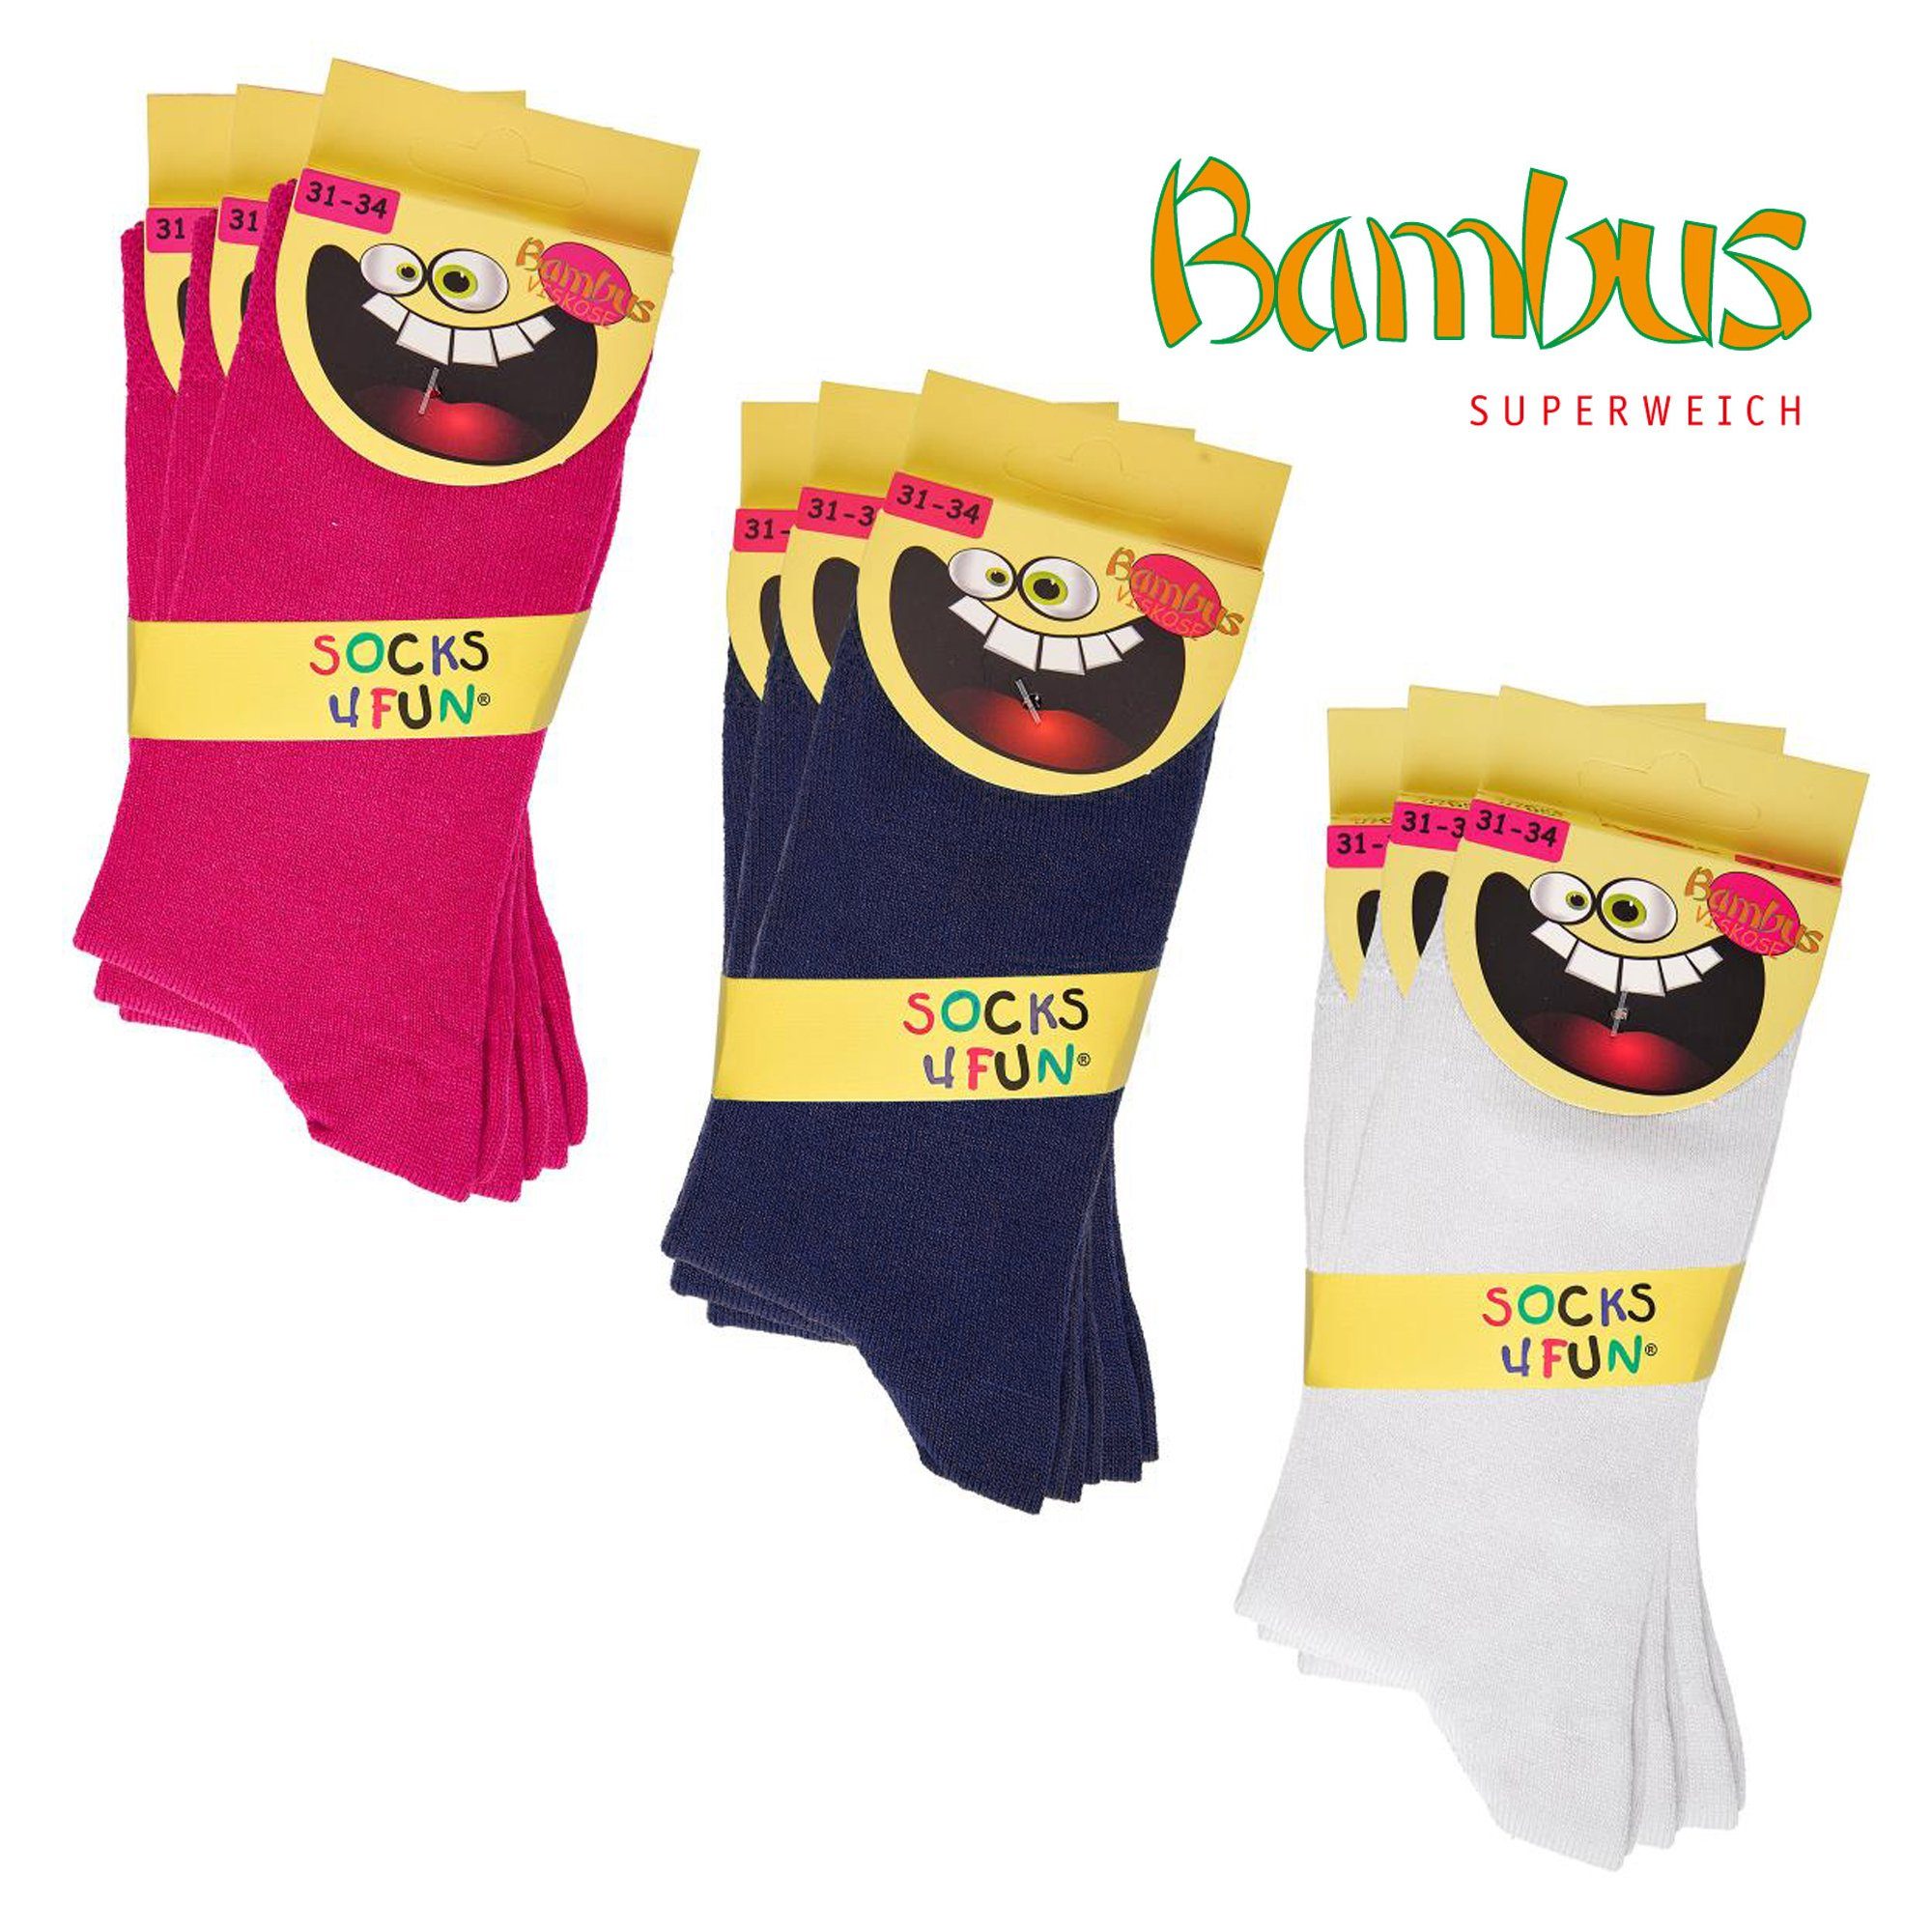 Socks 4 Fun Langsocken 3170 (Packung, 9-Paar, 9 Paar) unifarbene Kinder Socken, Jungen & Mädchen, Kindersocken pink+marine+weiss